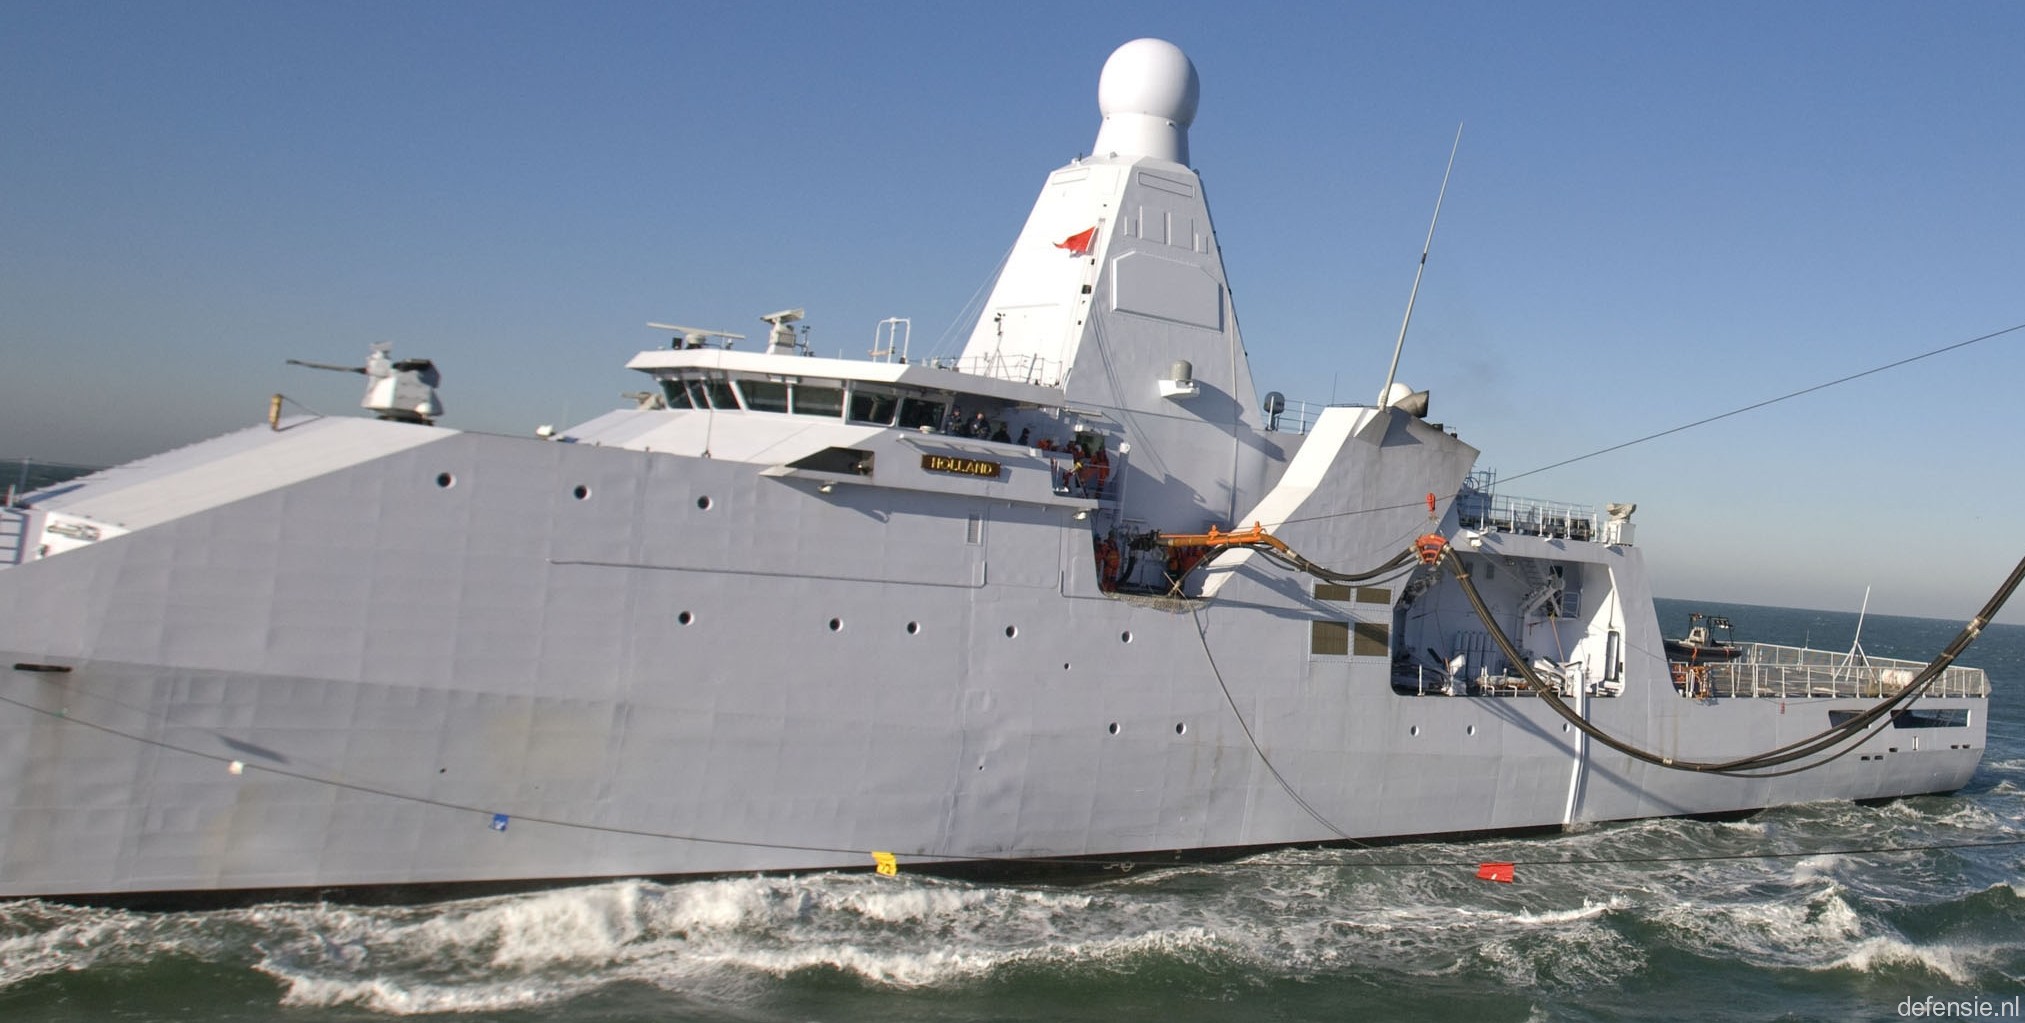 p-840 hnlms holland offshore patrol vessel opv royal netherlands navy 30